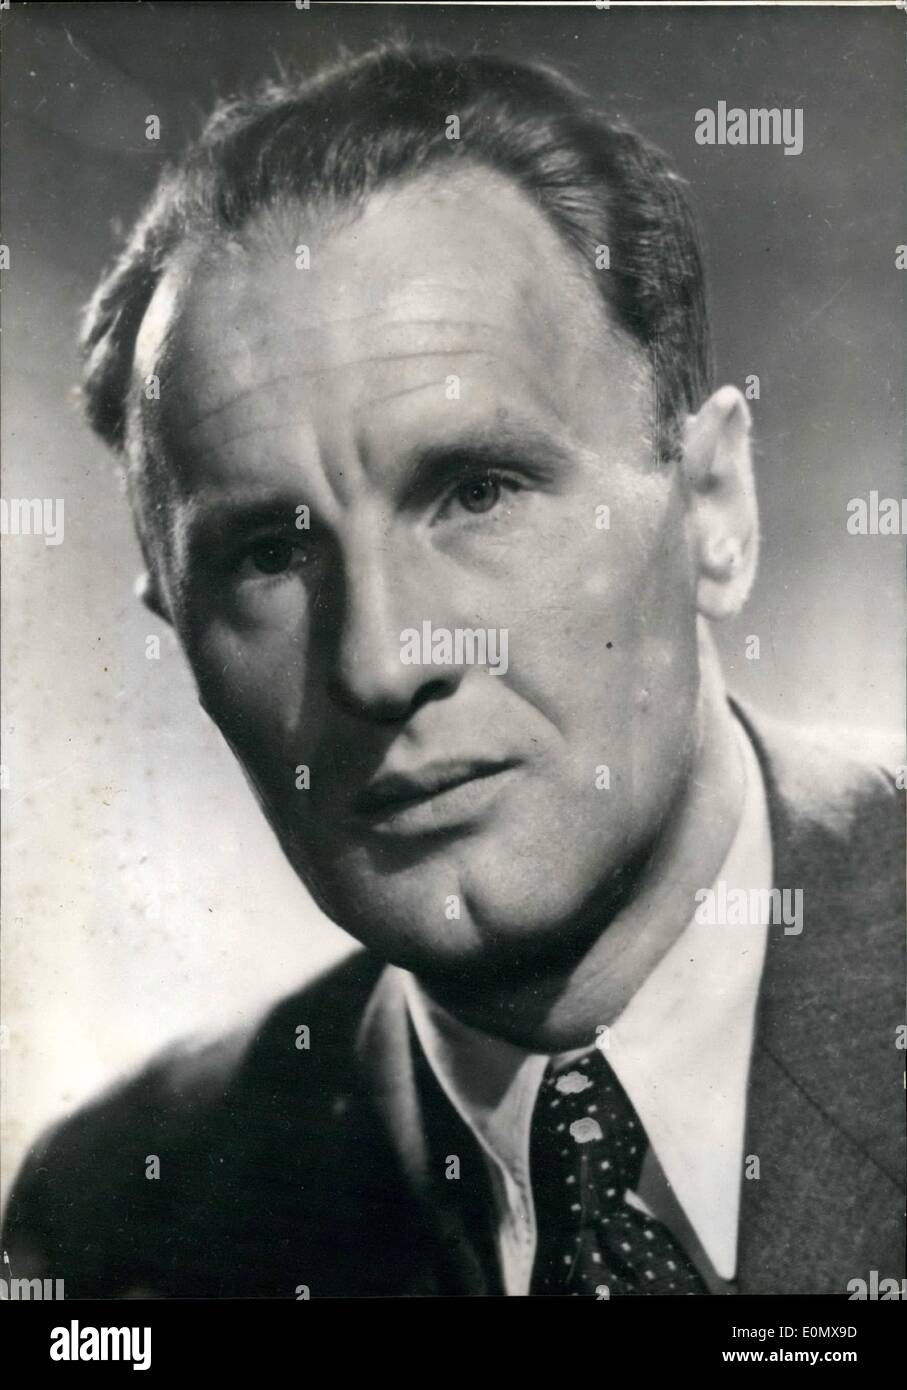 Oct. 10, 1956 - Kadar Succeeds Geroe as first secretary of Hungarian Communist Party. Photo shows A recent portrait of Janos Kadar who succeeds Erng Geroe as first secretary of the Hungarian worker's party. Stock Photo